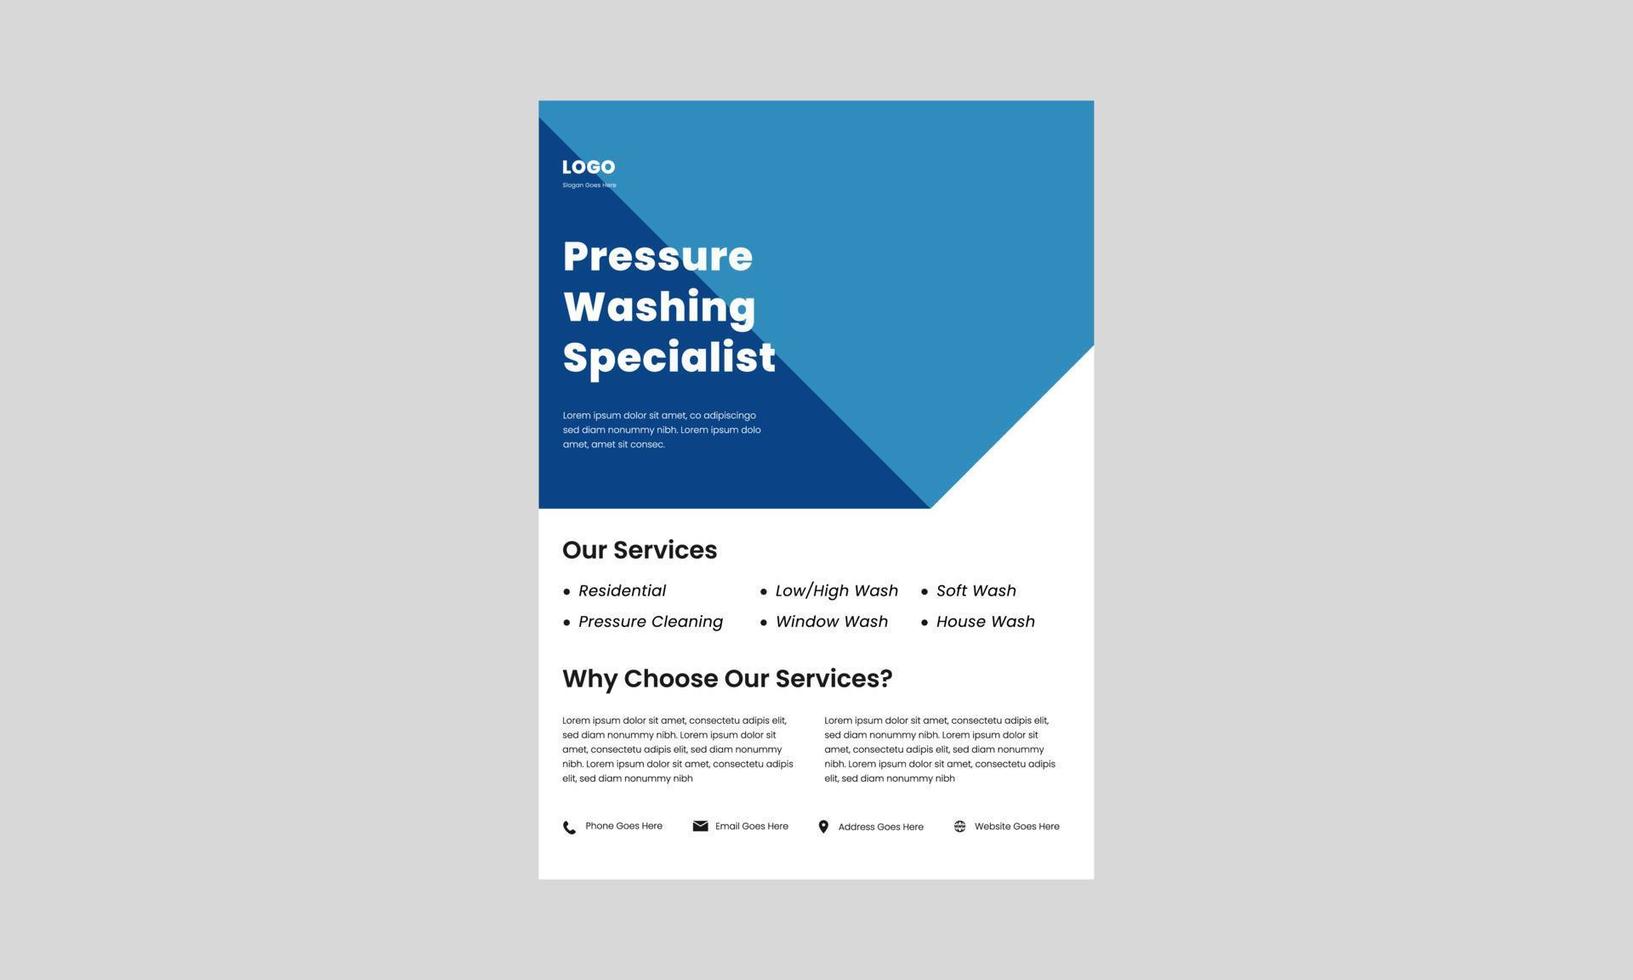 power washing service flyer design template. pressure wash service poster, leaflet design. professional power washing flyer. vector